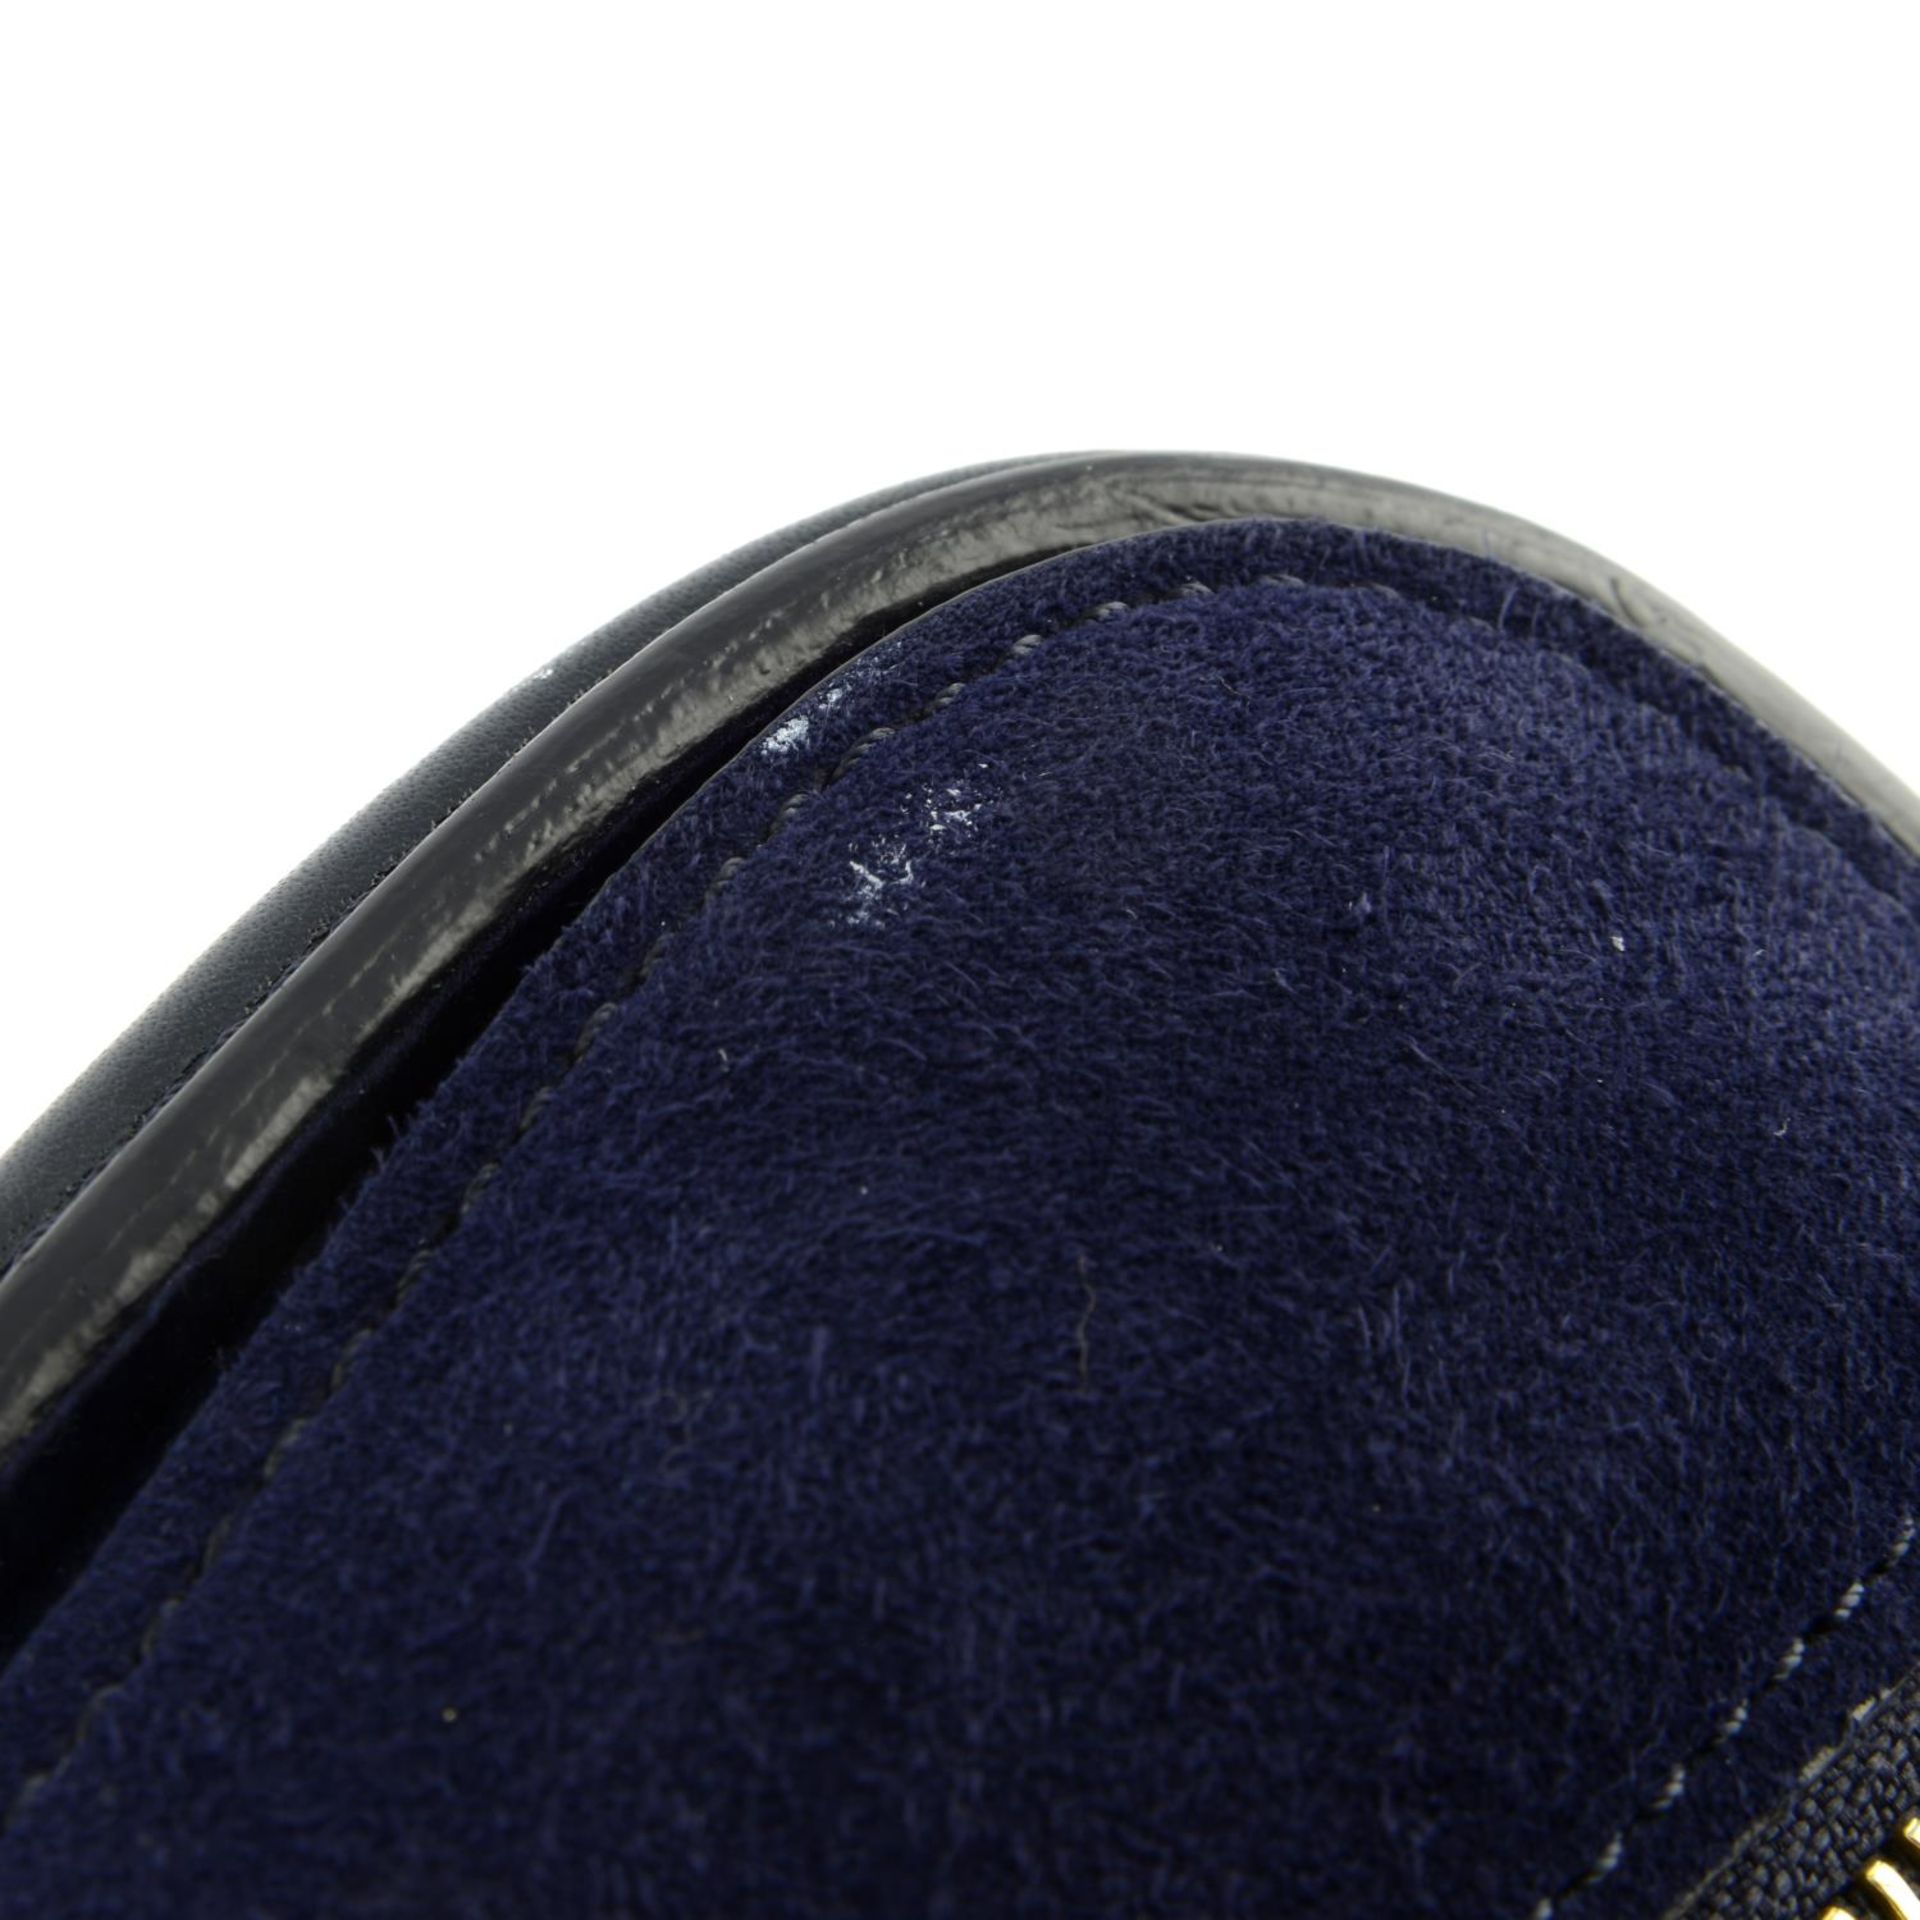 ALEXANDER MCQUEEN - a midnight blue python skin mini Heroine handbag. - Image 7 of 8